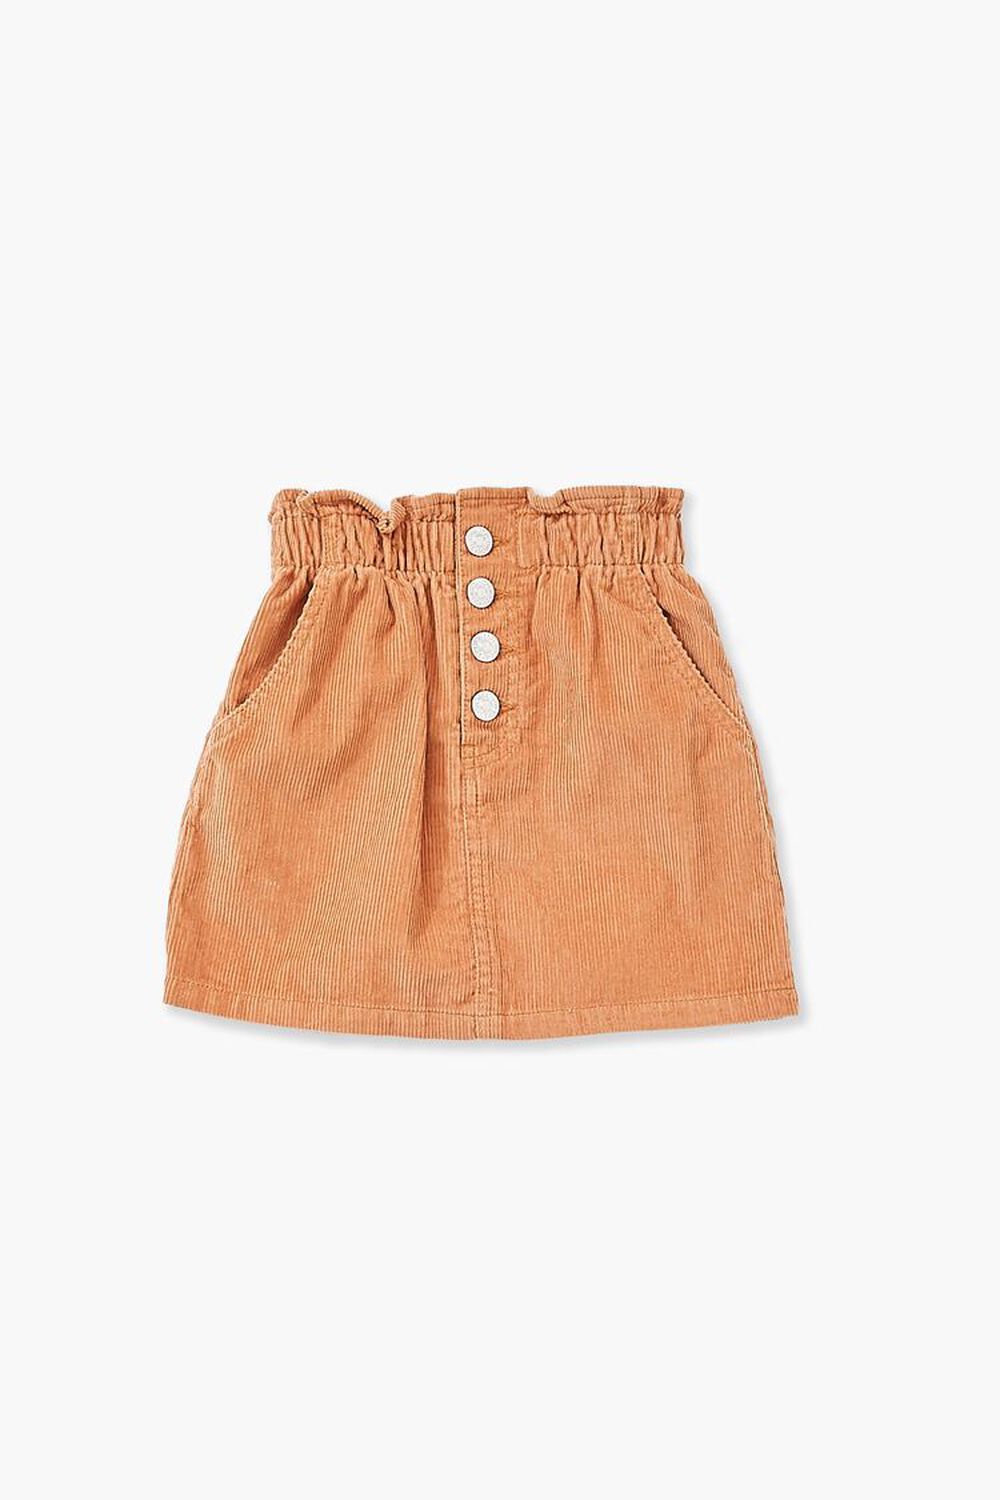 Girls Corduroy Skirt (Kids), image 1